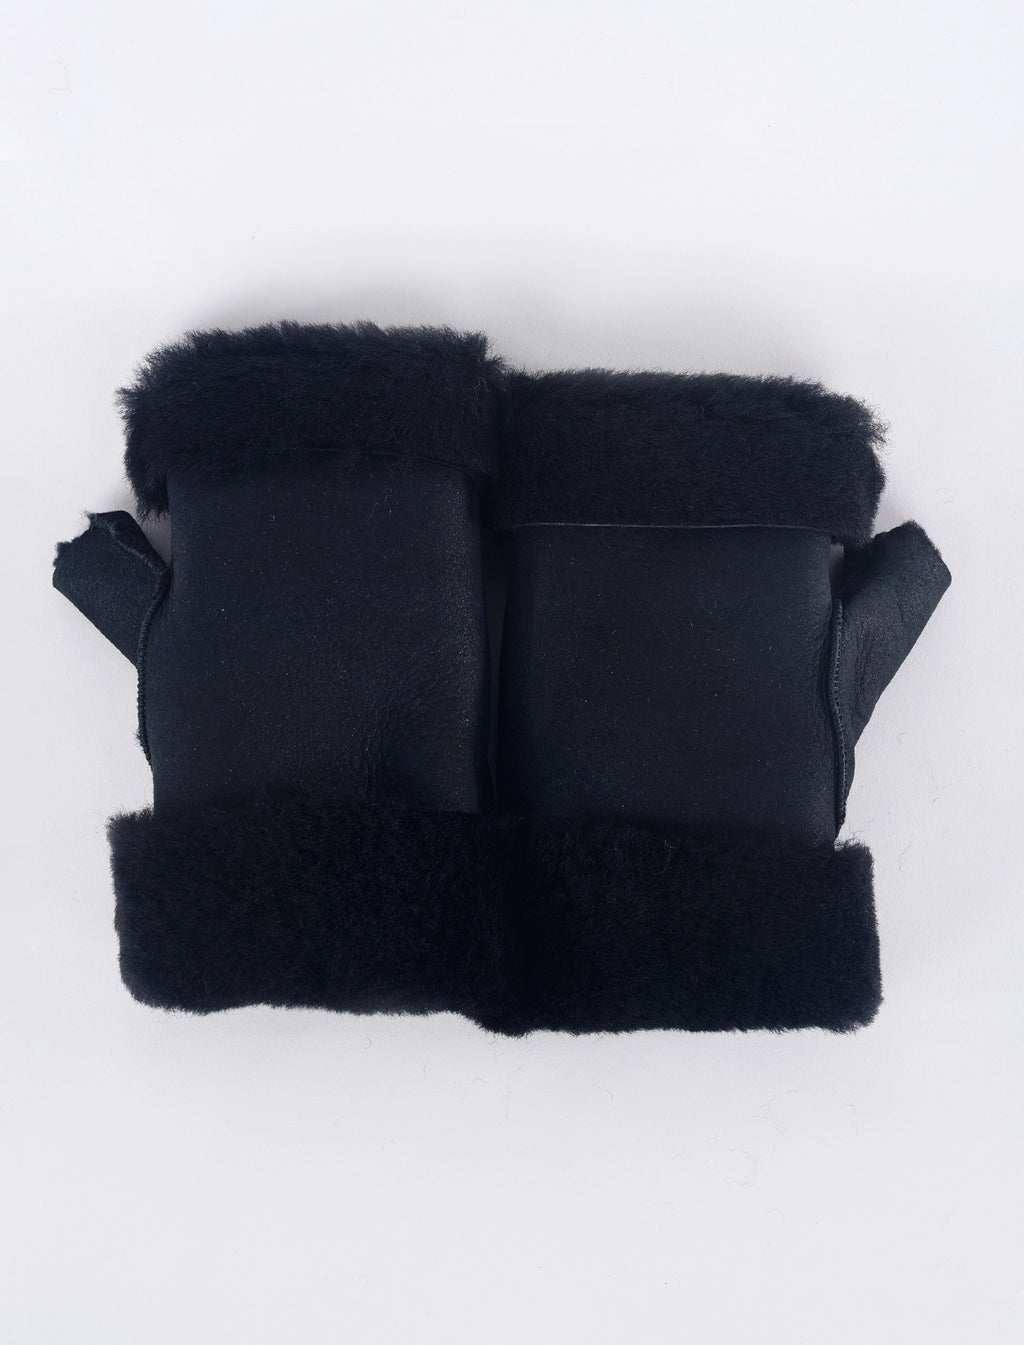 Santacana Madrid Shearling/Leather Handwarmers, Black 